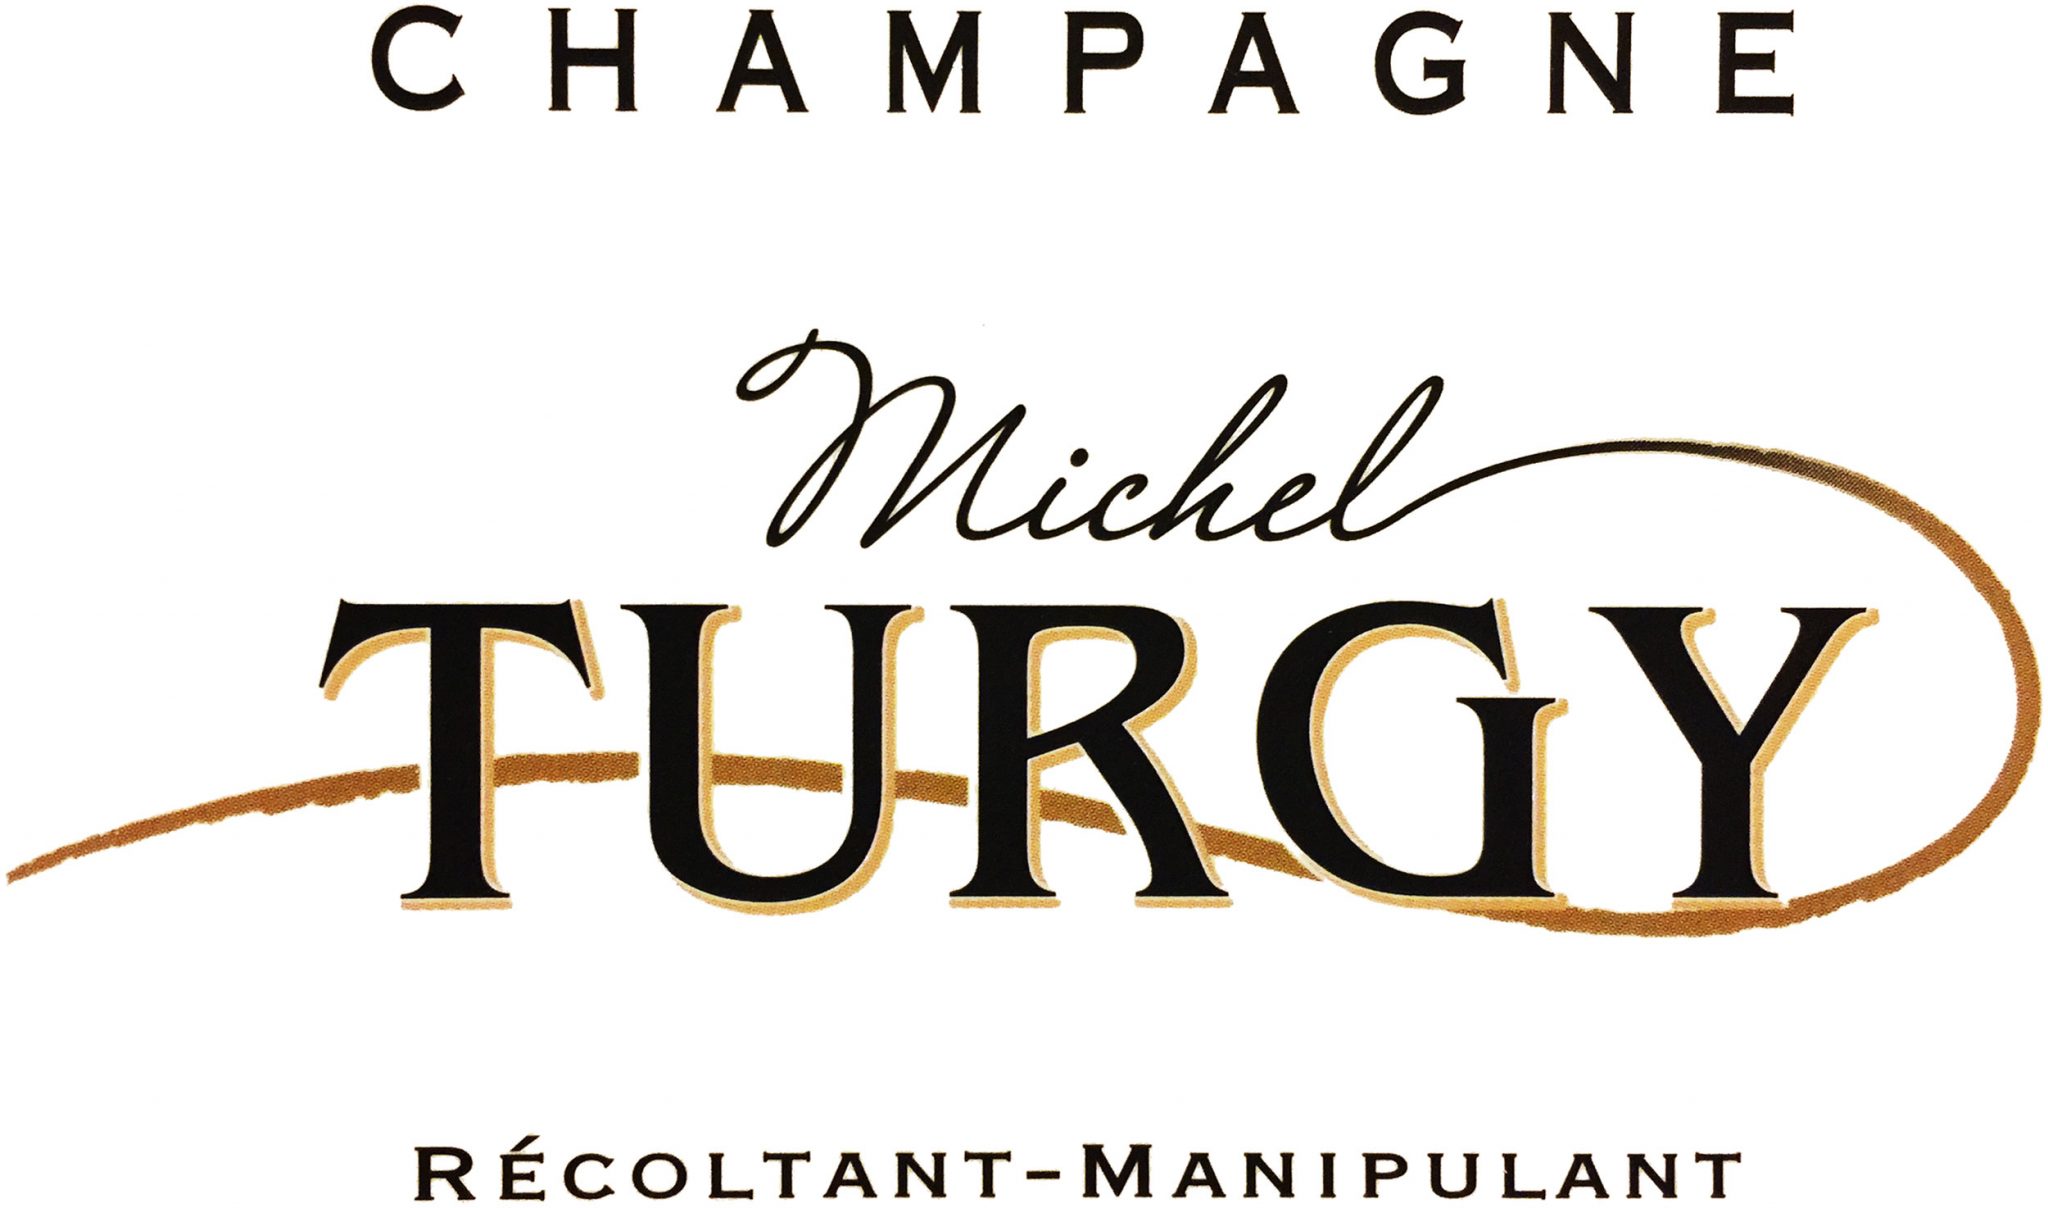 Champagne Michel Turgy